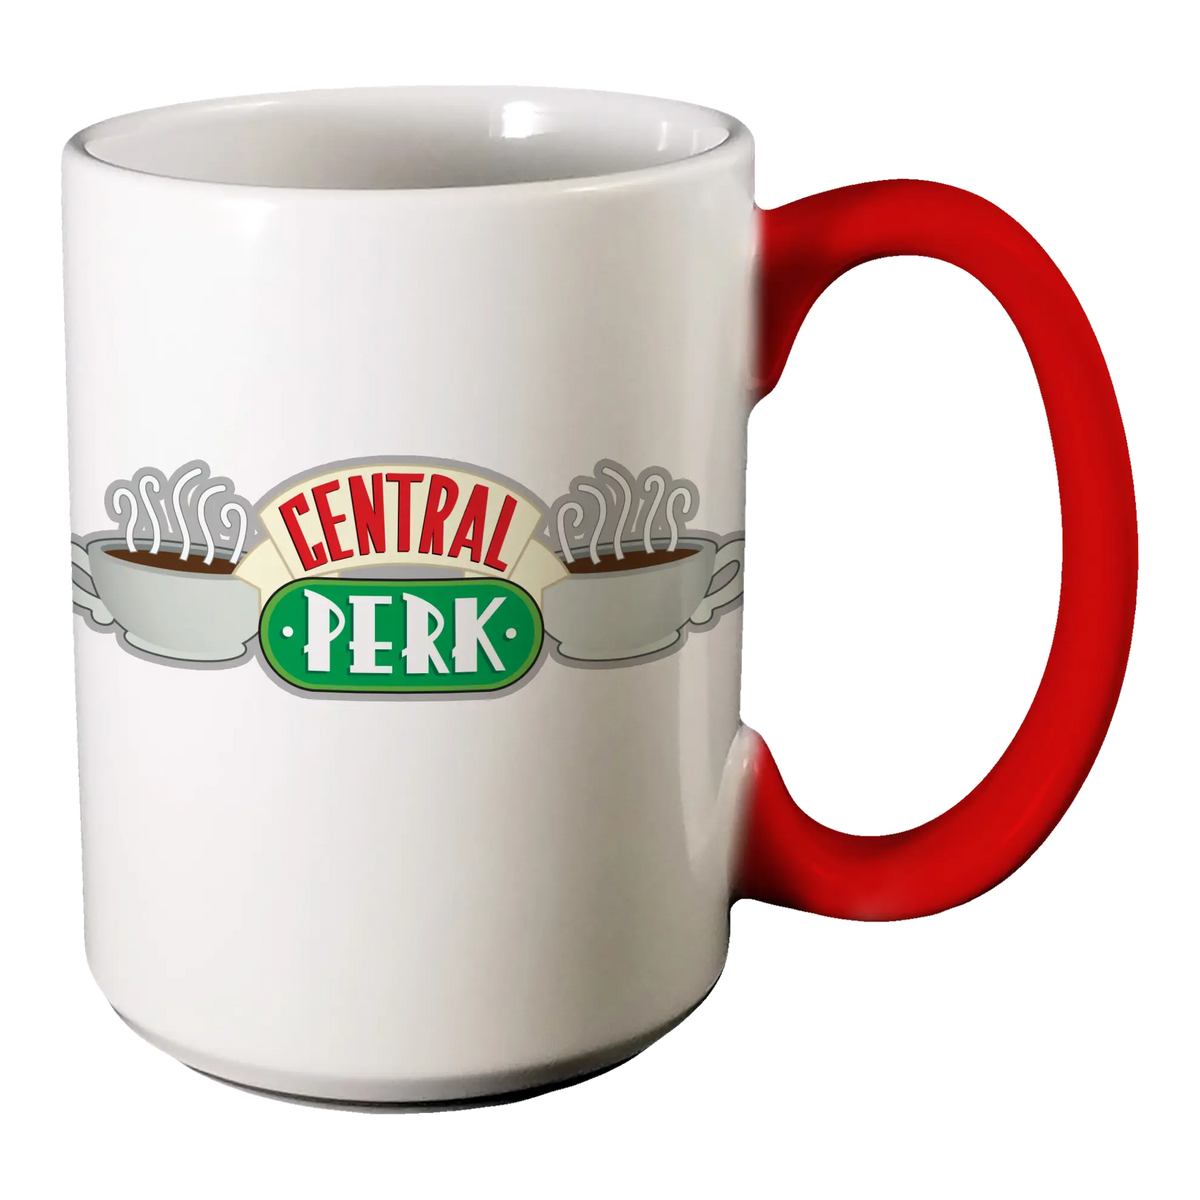 Central Perk Coffee Mug